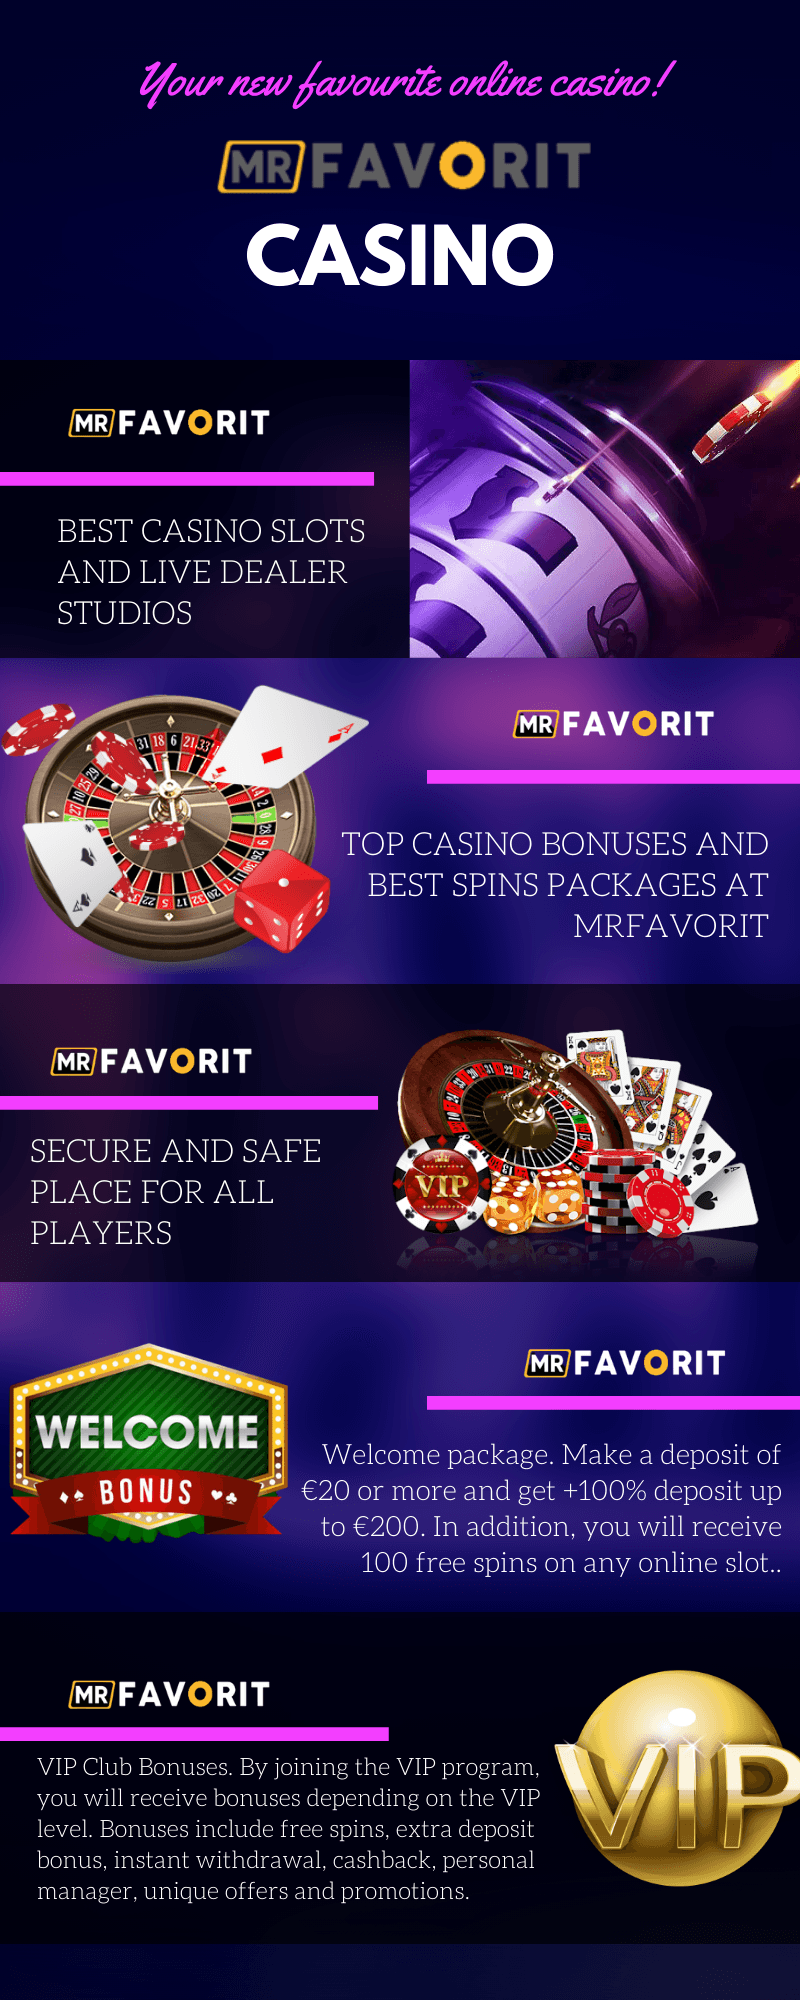 MrFavorit Online Casino